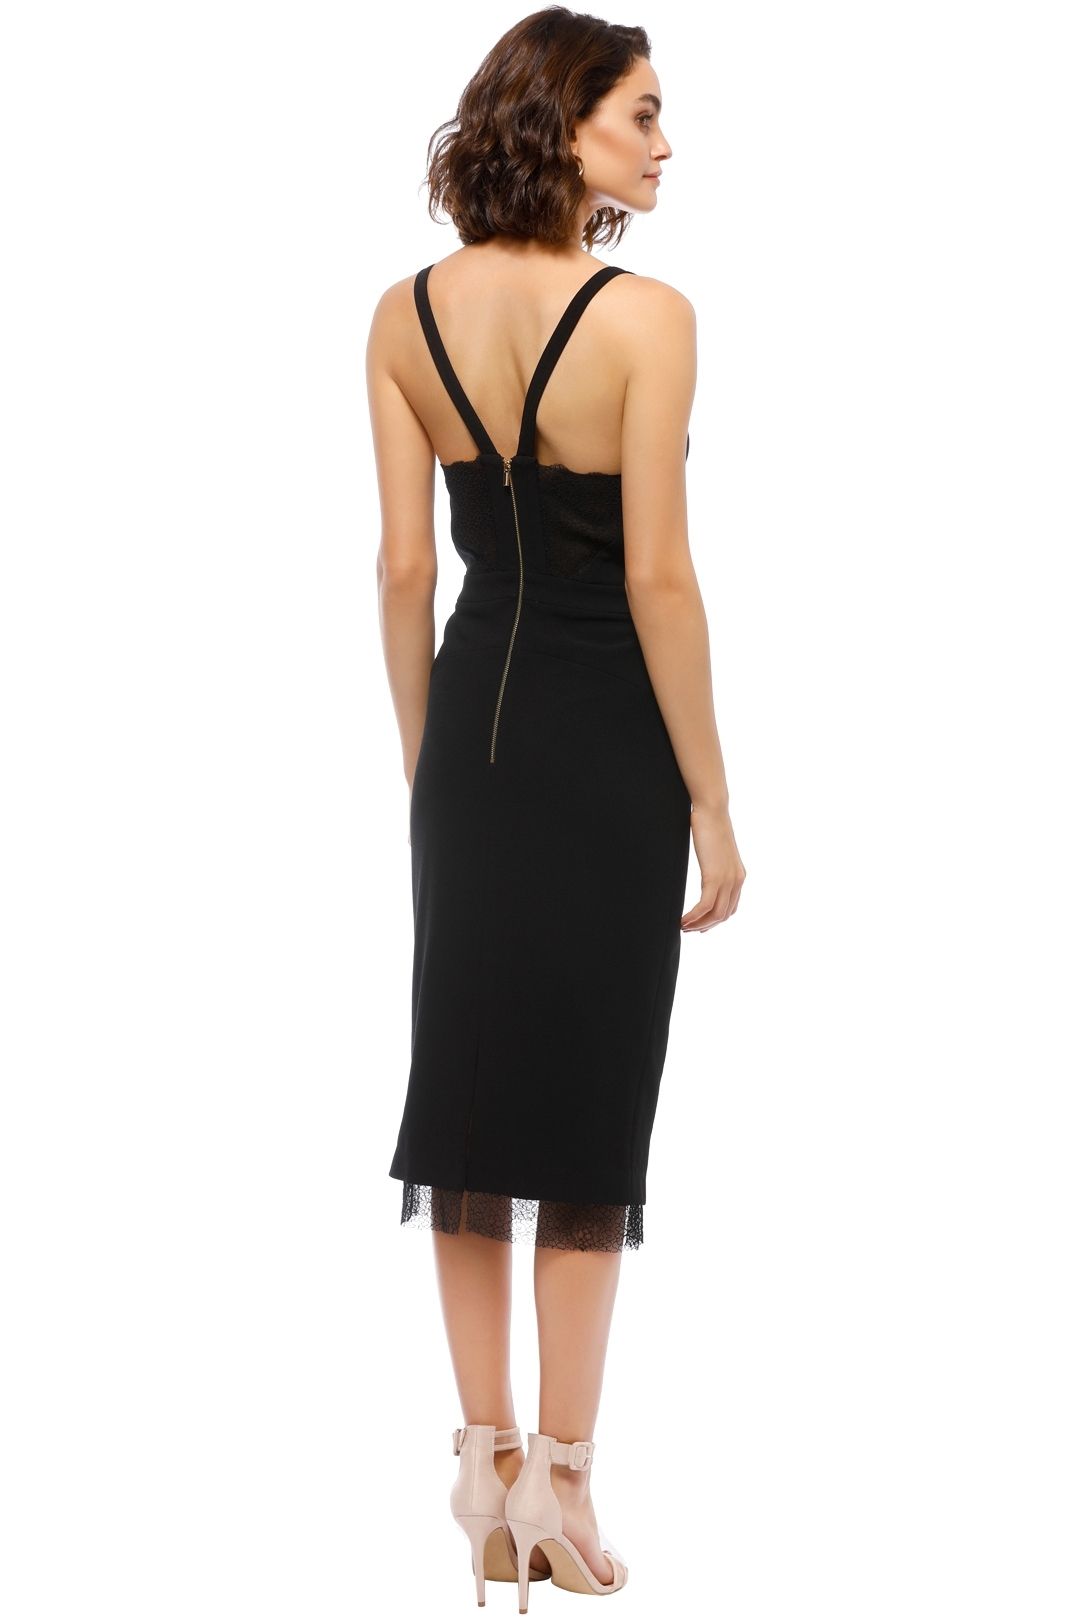 Rebecca Vallance - Demoiselles Dress - Black - Back